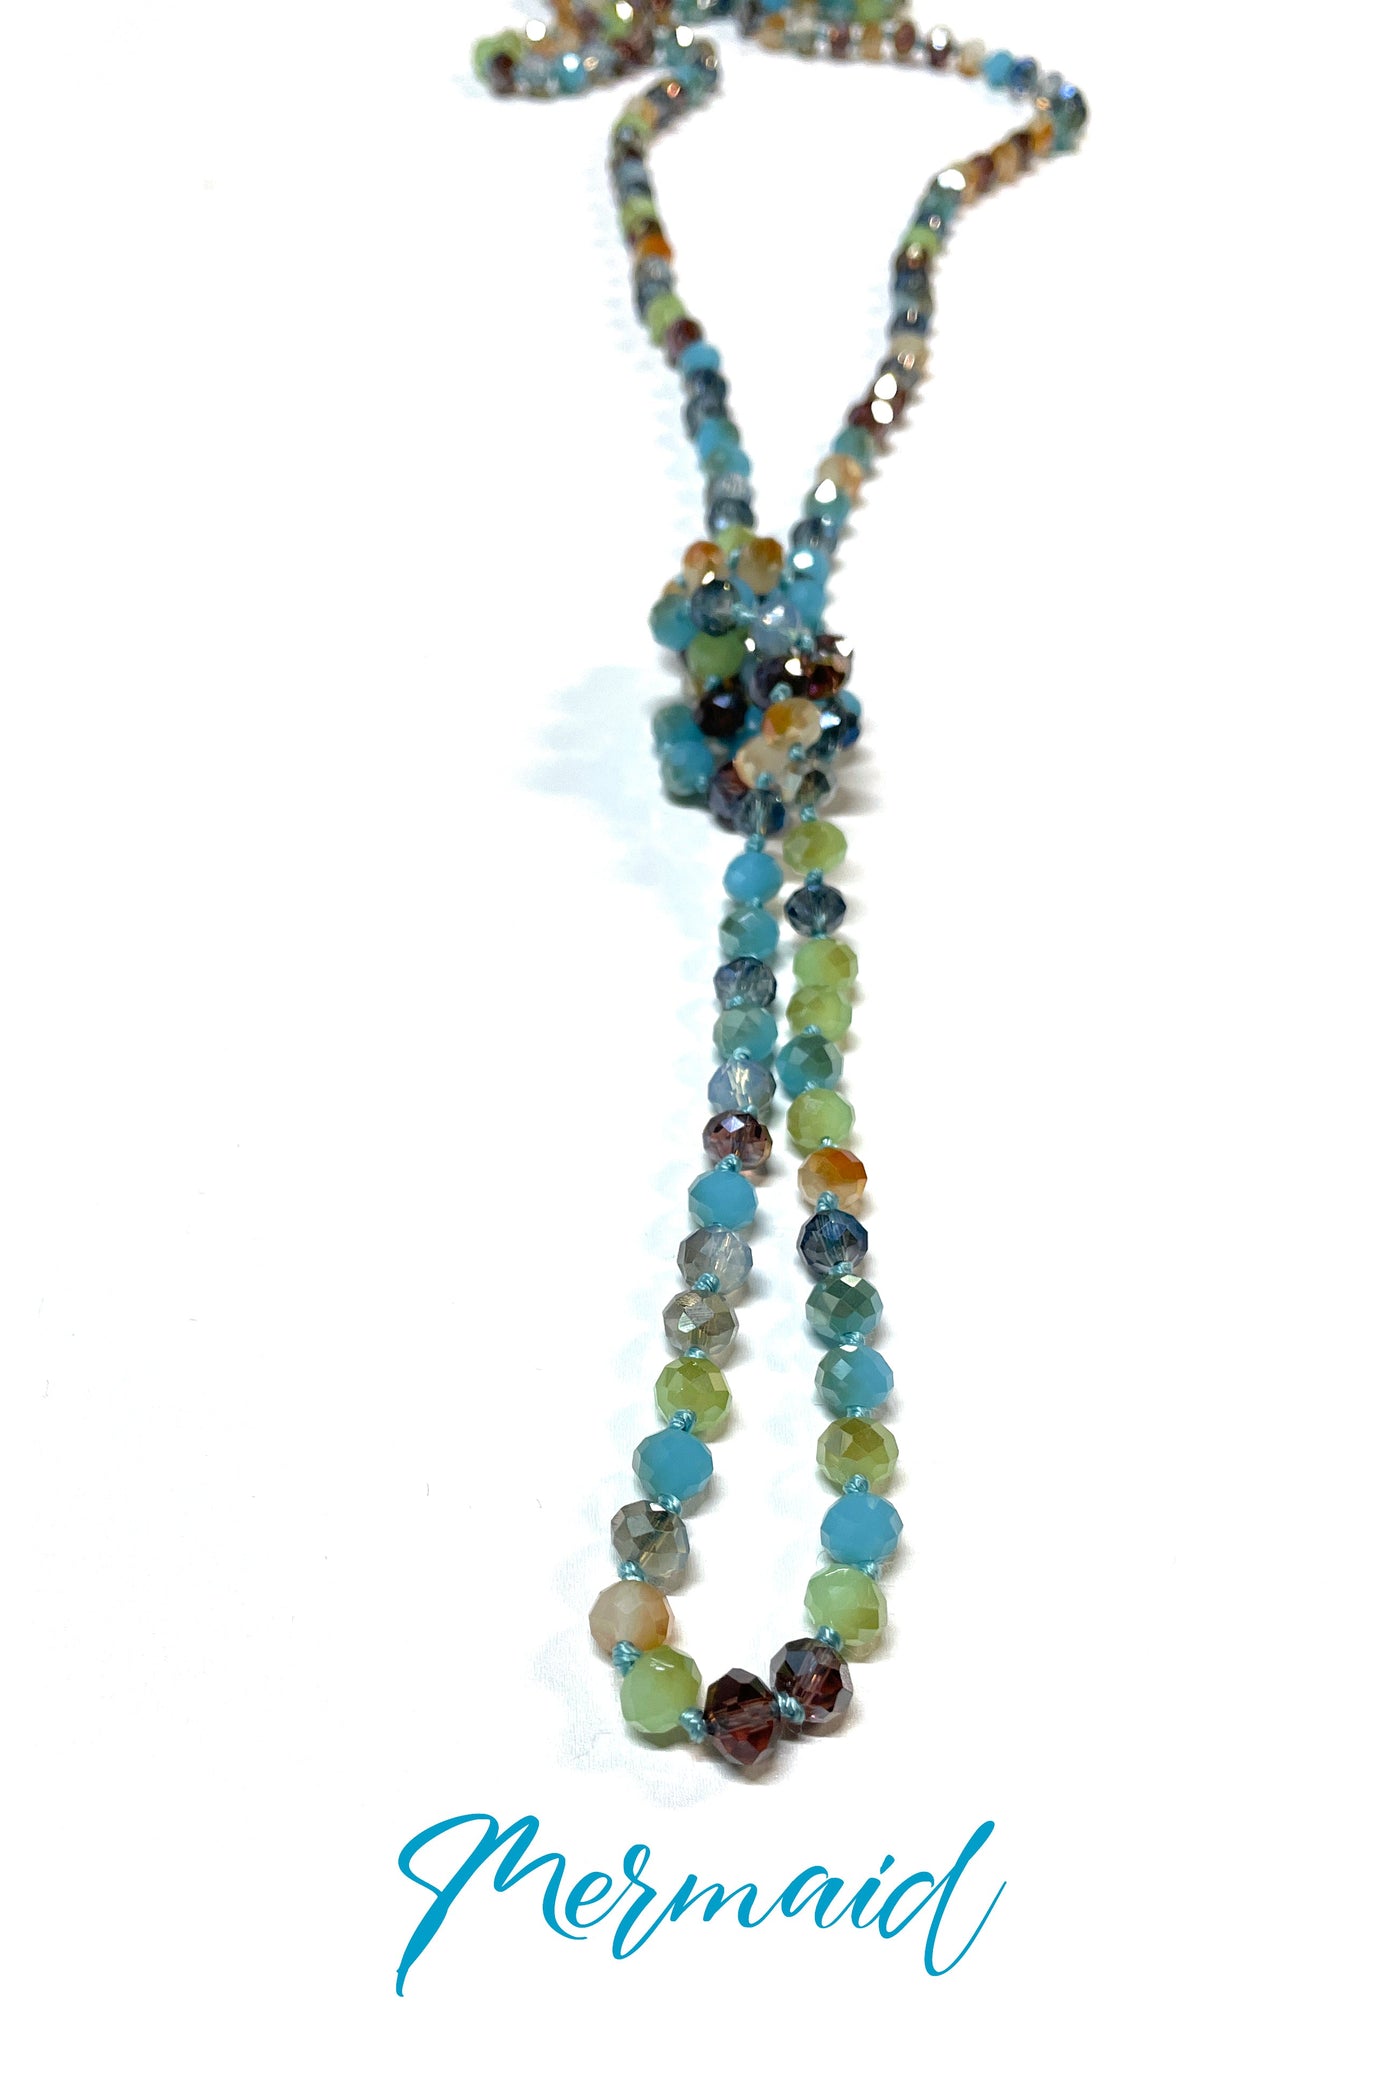 Wrap Necklaces 60" - All Colors jewelry ViVi Liam Jewelry Mermaid 